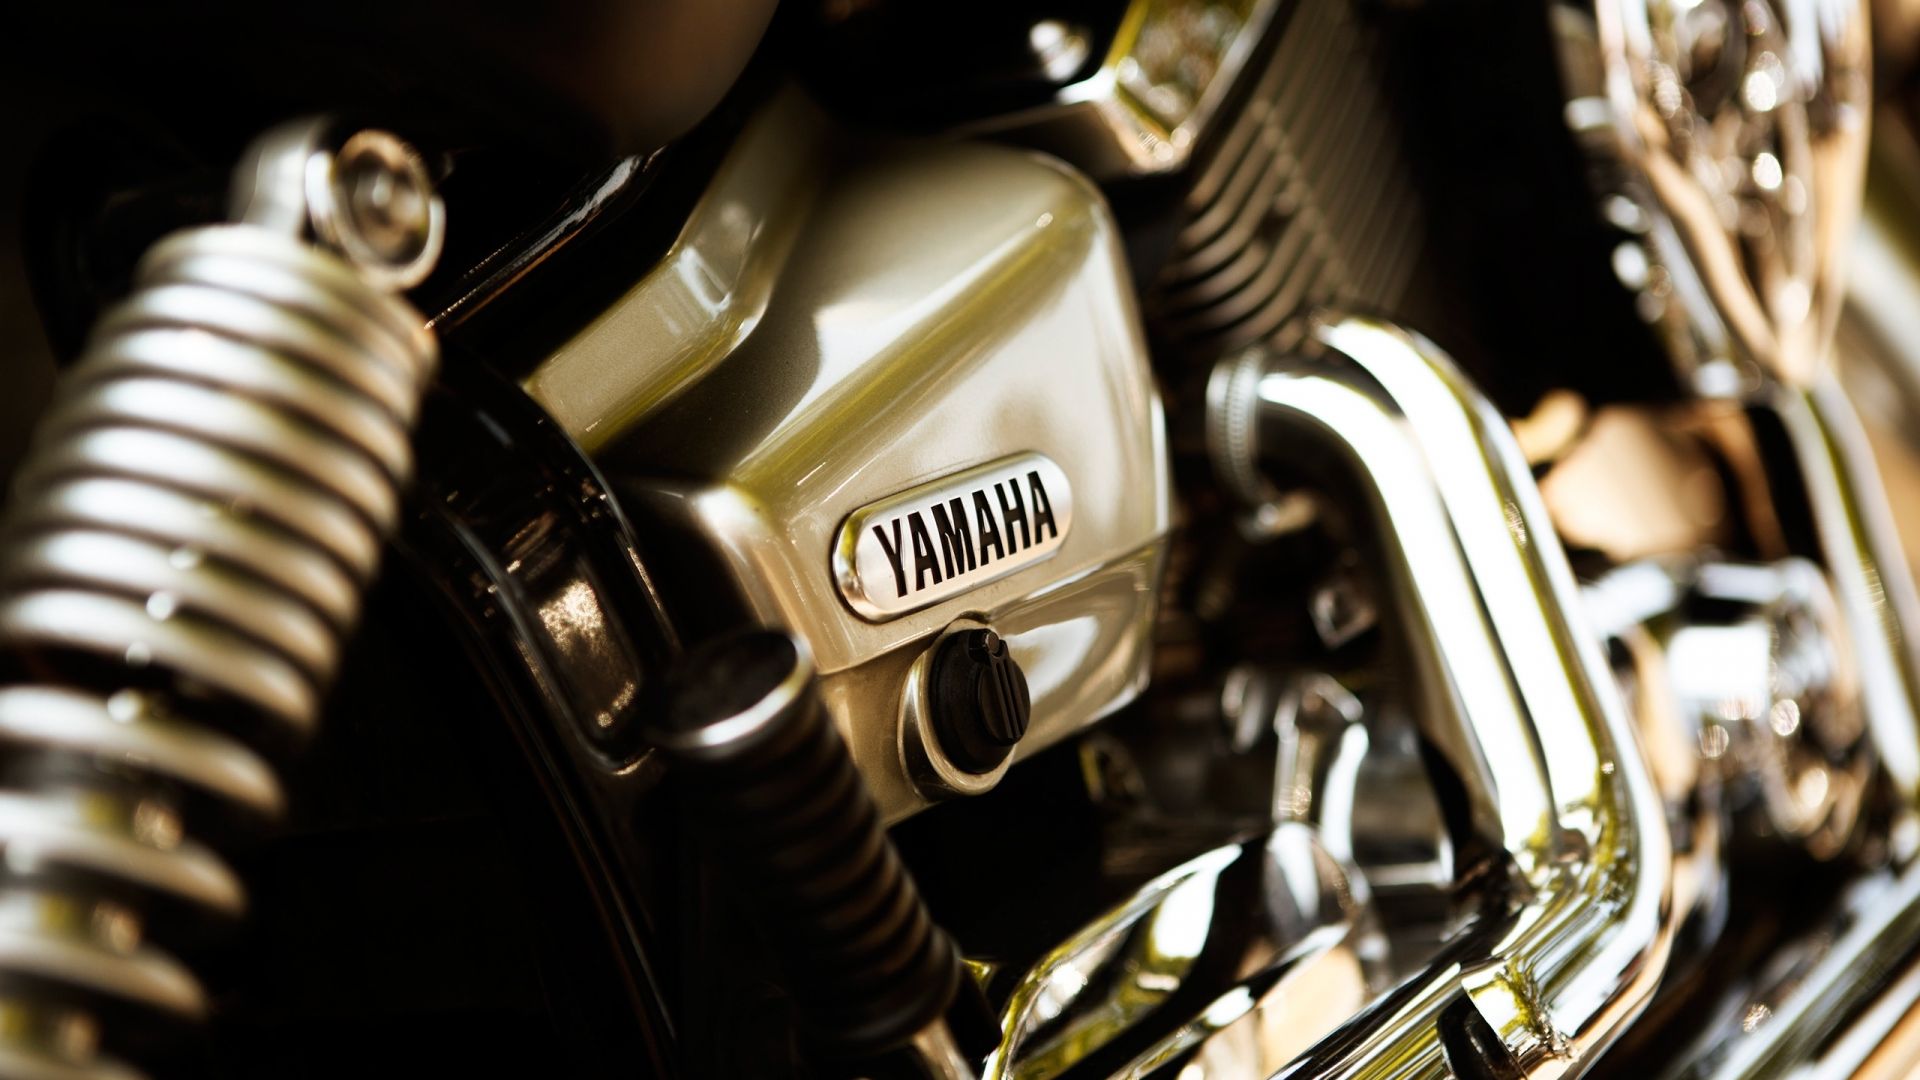 Wallpaper Yamaha bike engine 2017